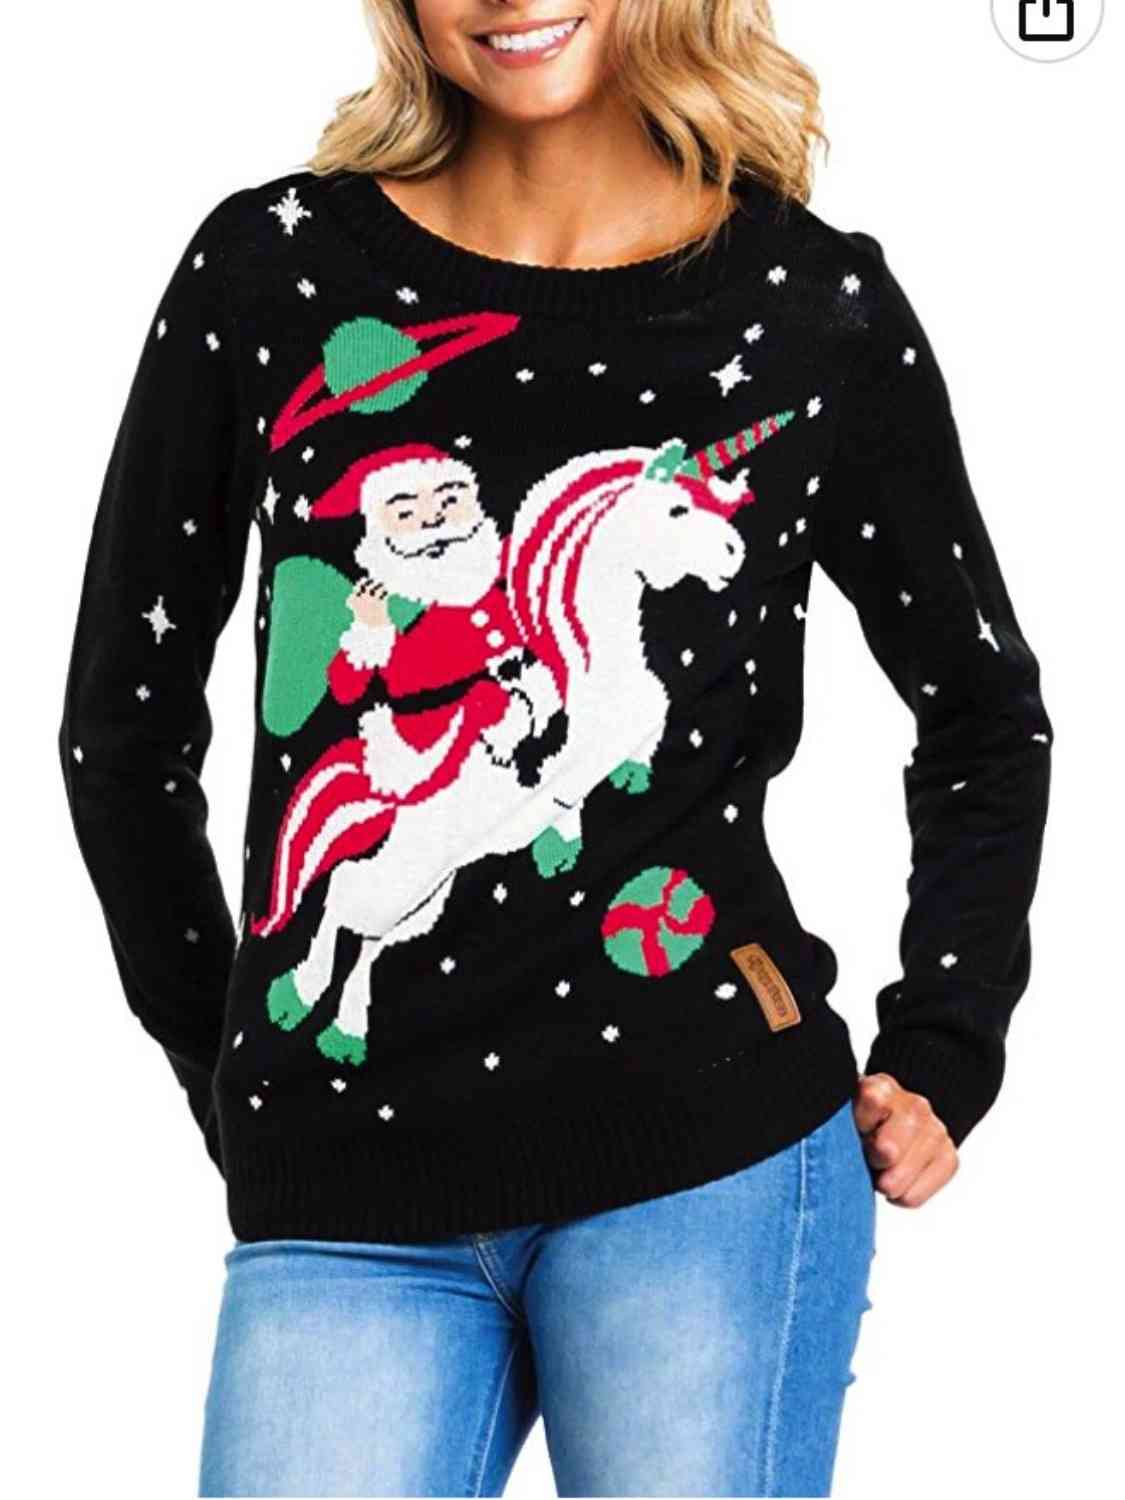 Unicorn Christmas Round Neck Knit Top